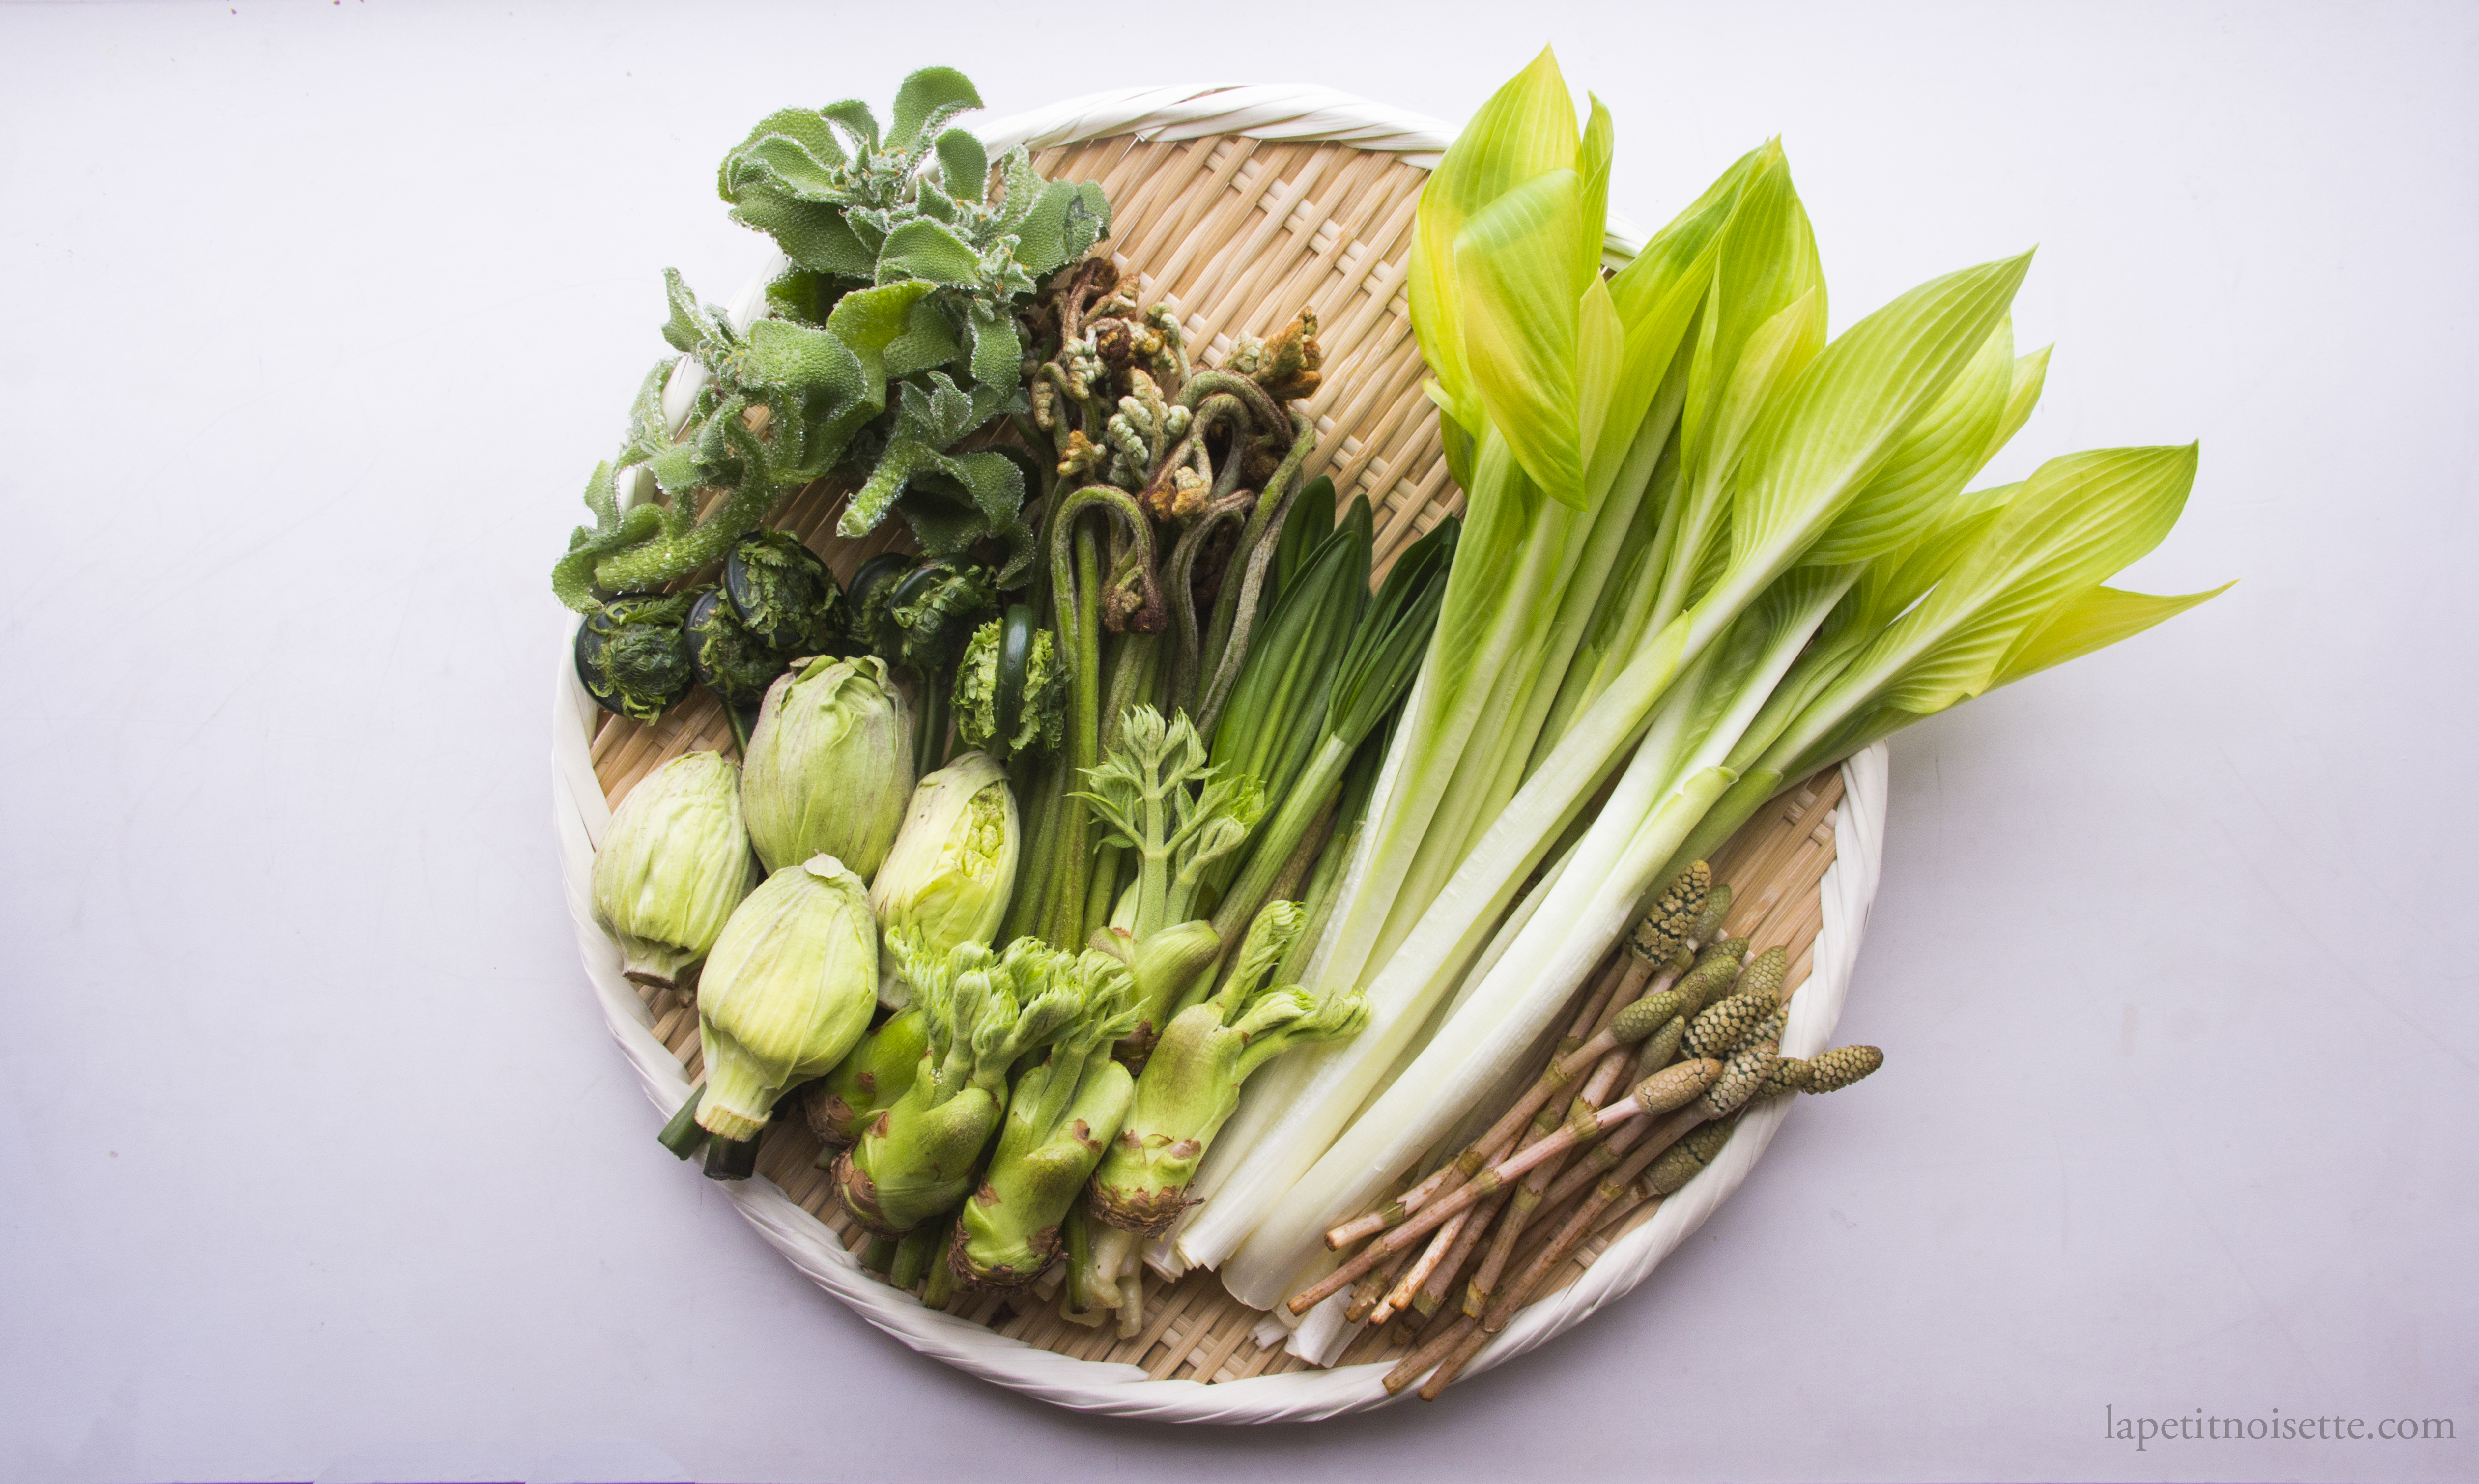 A variety of wild Japanese mountain vegetables known as Sansai.